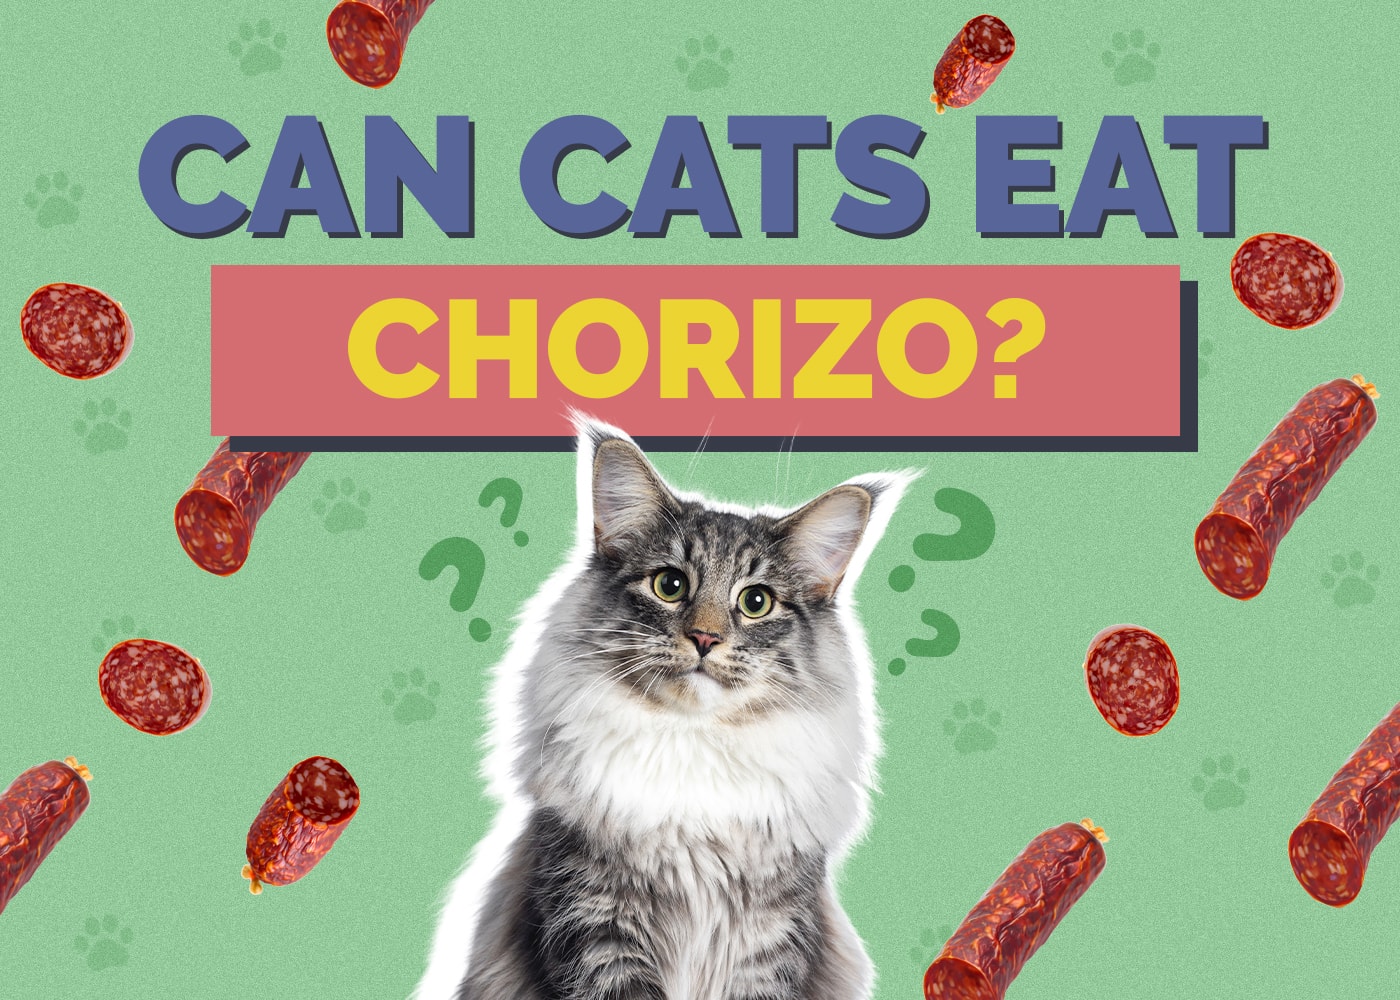 Can Cats Eat chorizo